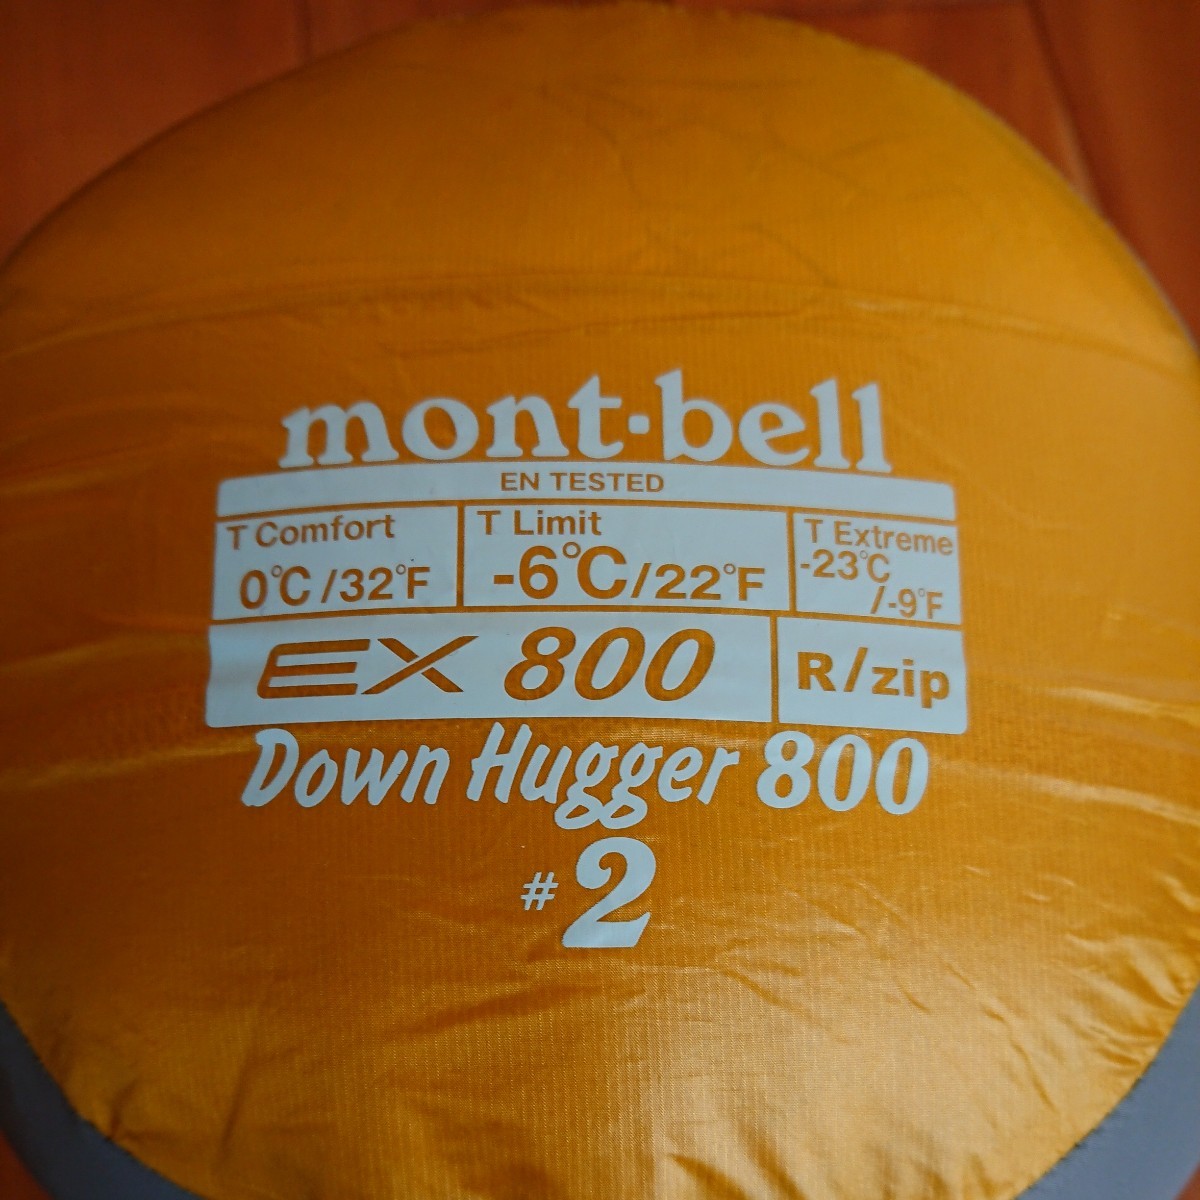  Mont Bell спальный мешок down Hugger 800 # 1121290 спальный мешок 